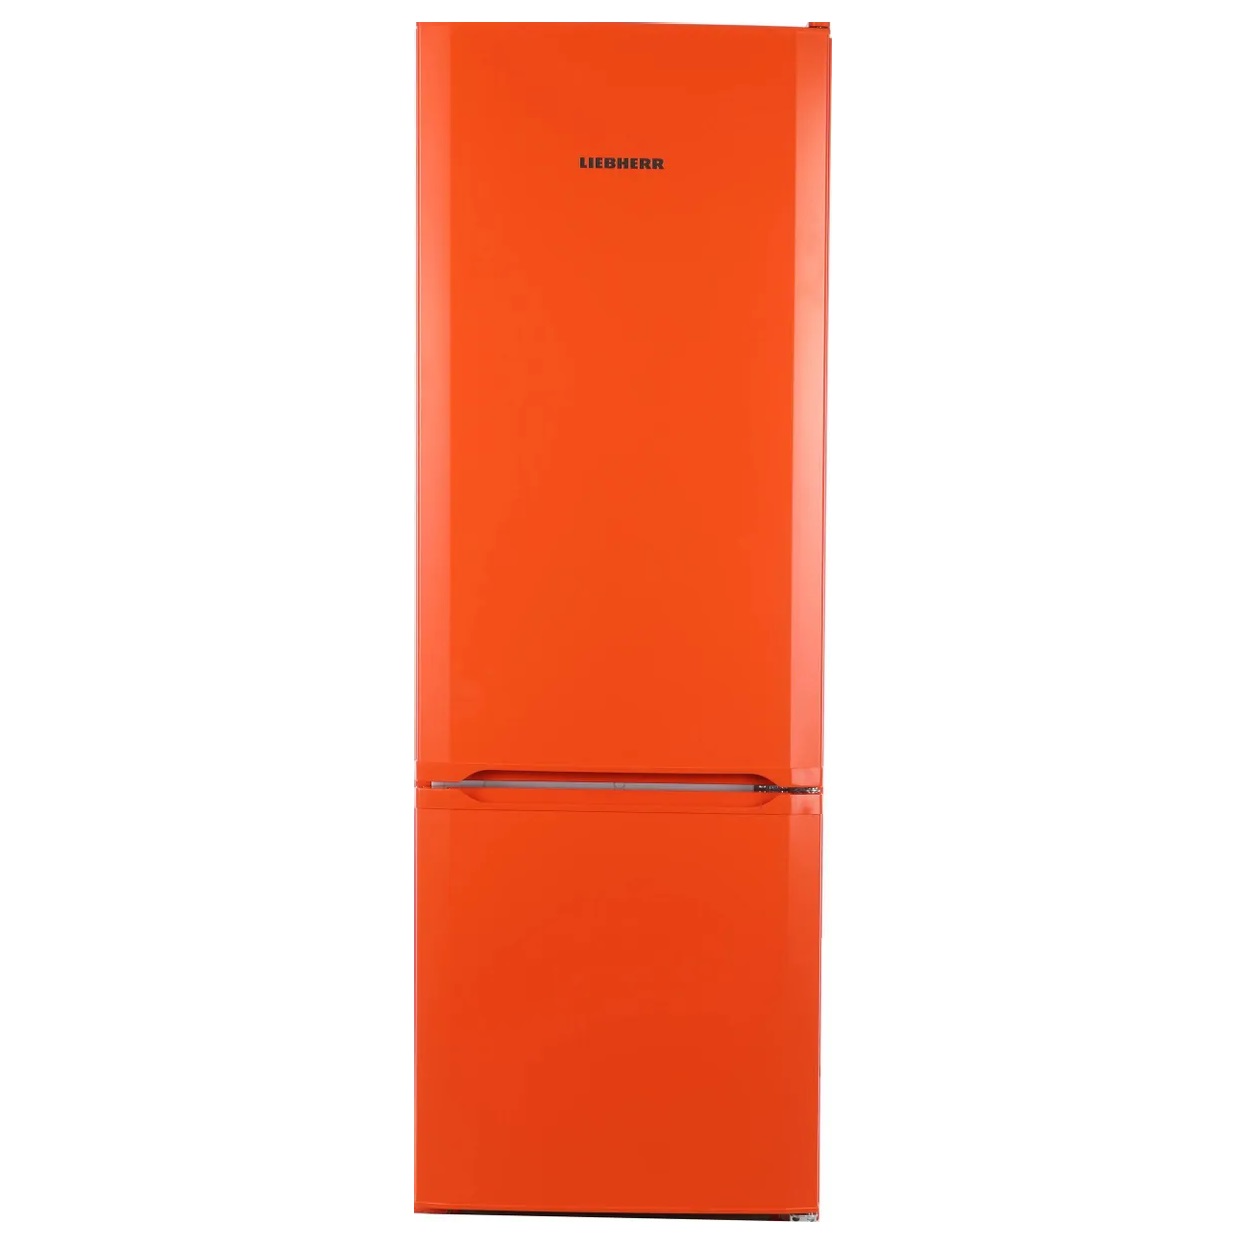 Холодильник LIEBHERR CUNO 2831-22 001 оранжевый холодильник liebherr cufb 2831 22 синий